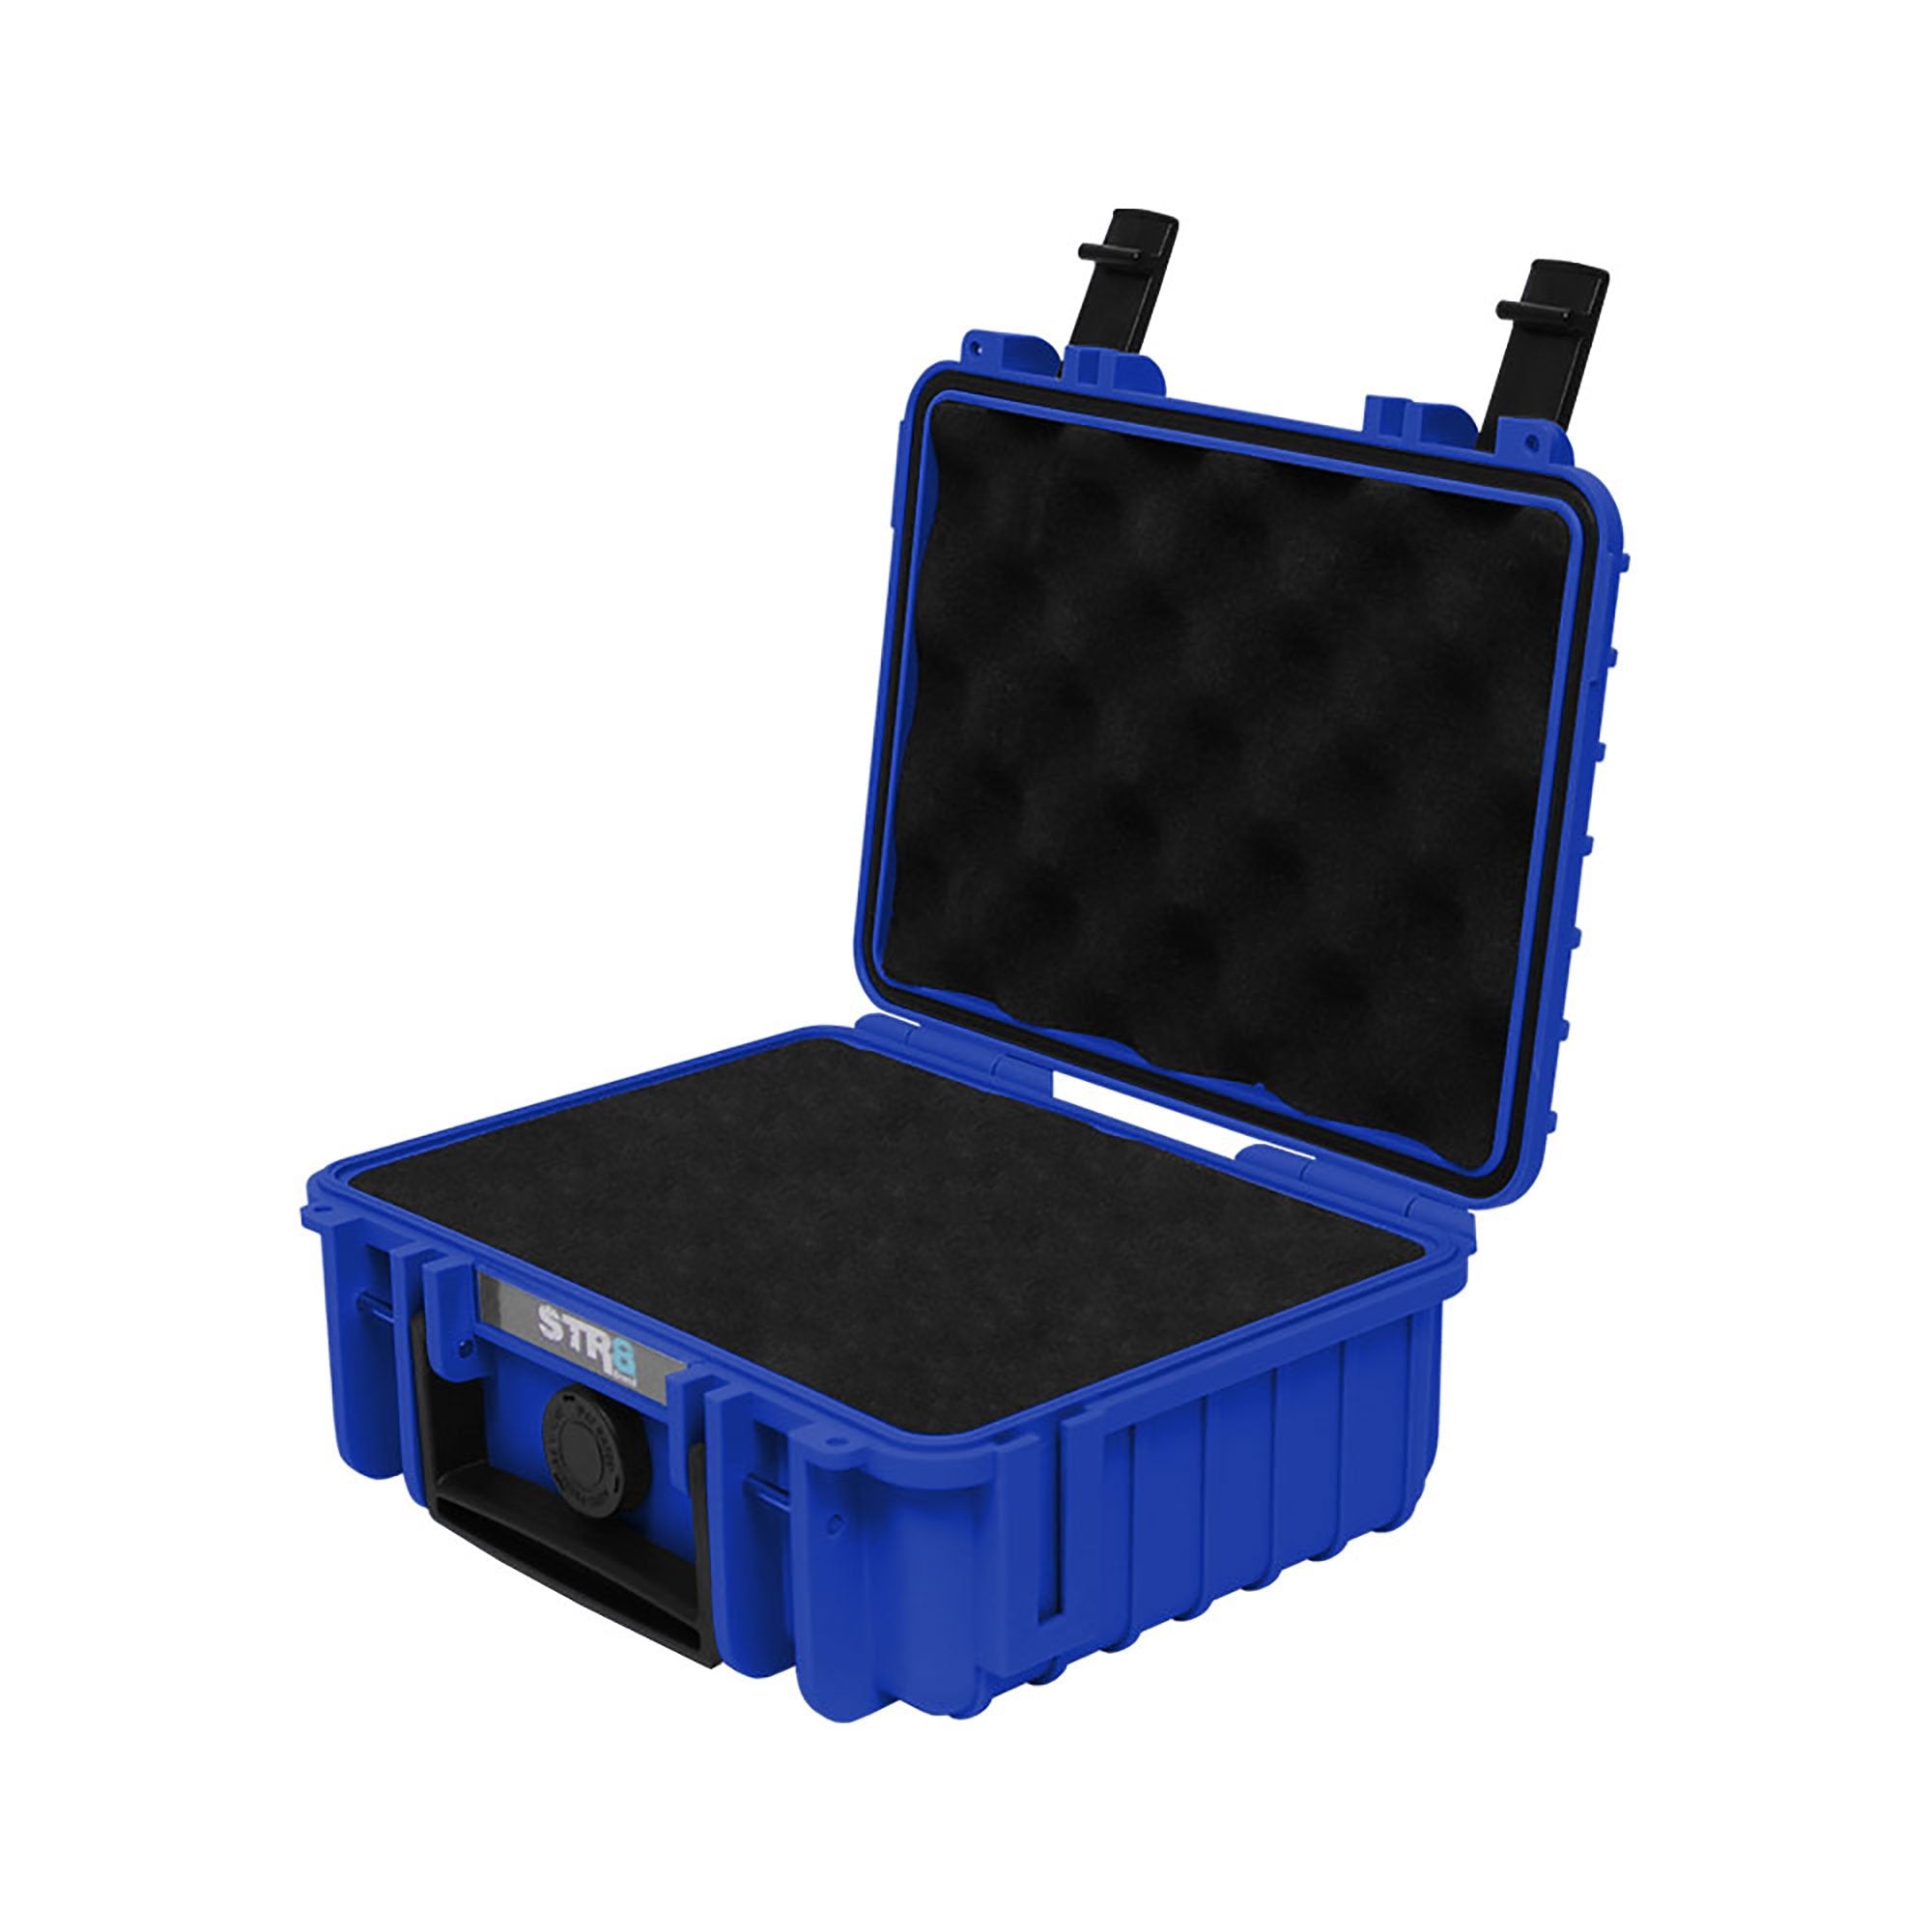 8" 2 Layer Cobalt Blue STR8 Case - 2